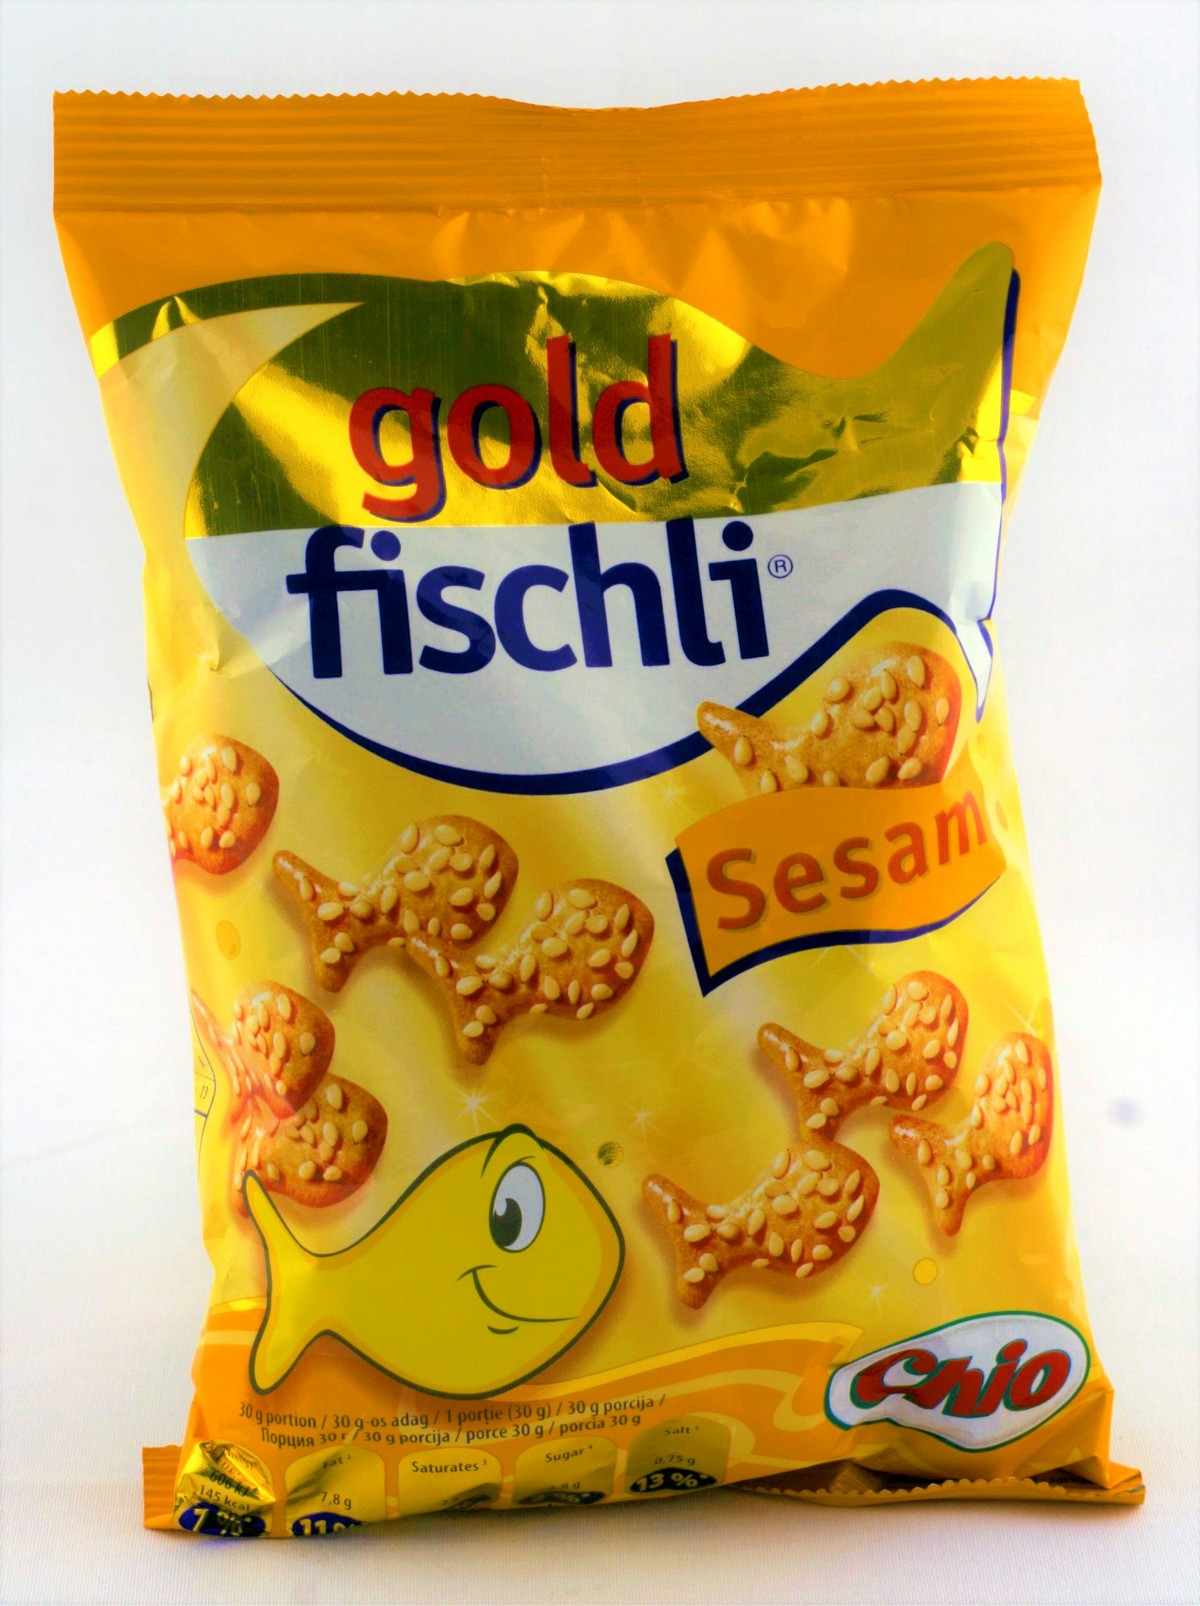 CHIO GOLD FISCHLI SESAM 100G # 20 buc